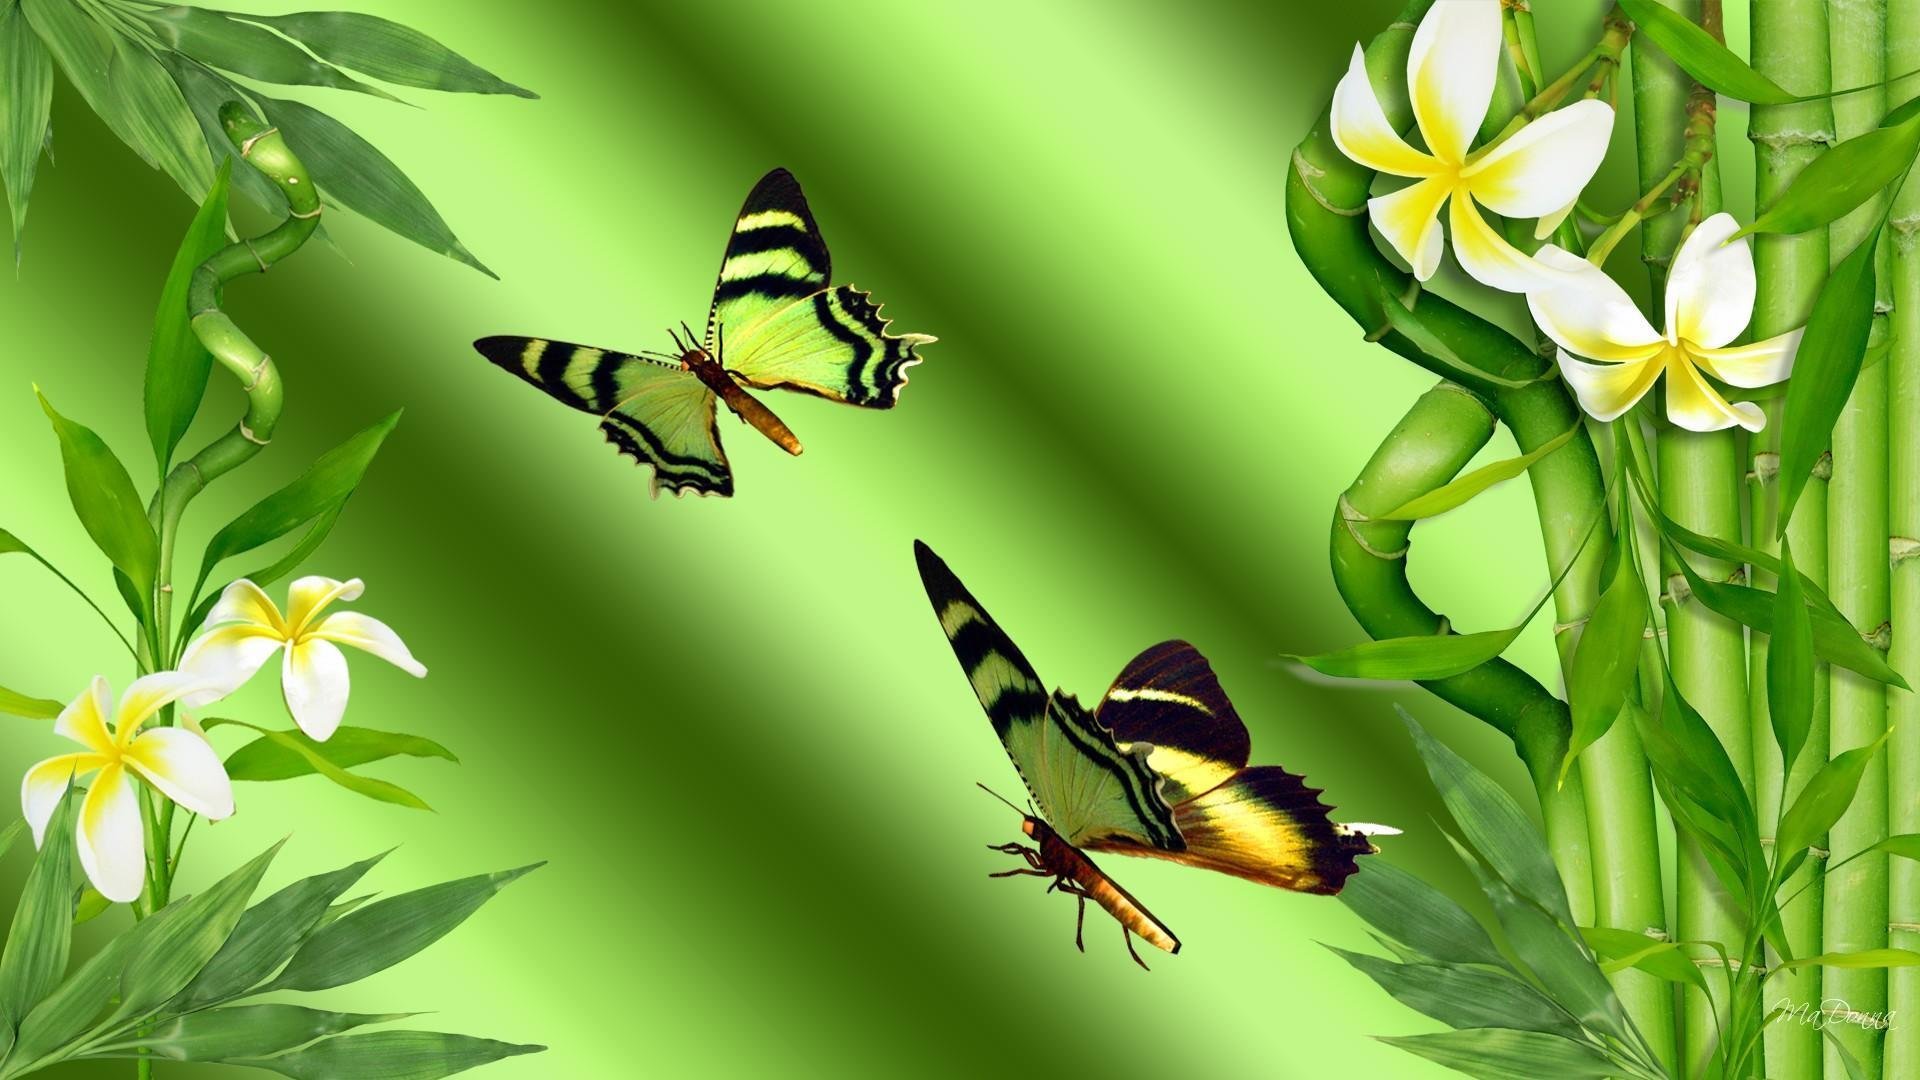 Желто зеленая бабочка. Обои на рабочий стол бабочки. Бабочки в природе. Фотообои бабочки. Красивый фон с бабочками.